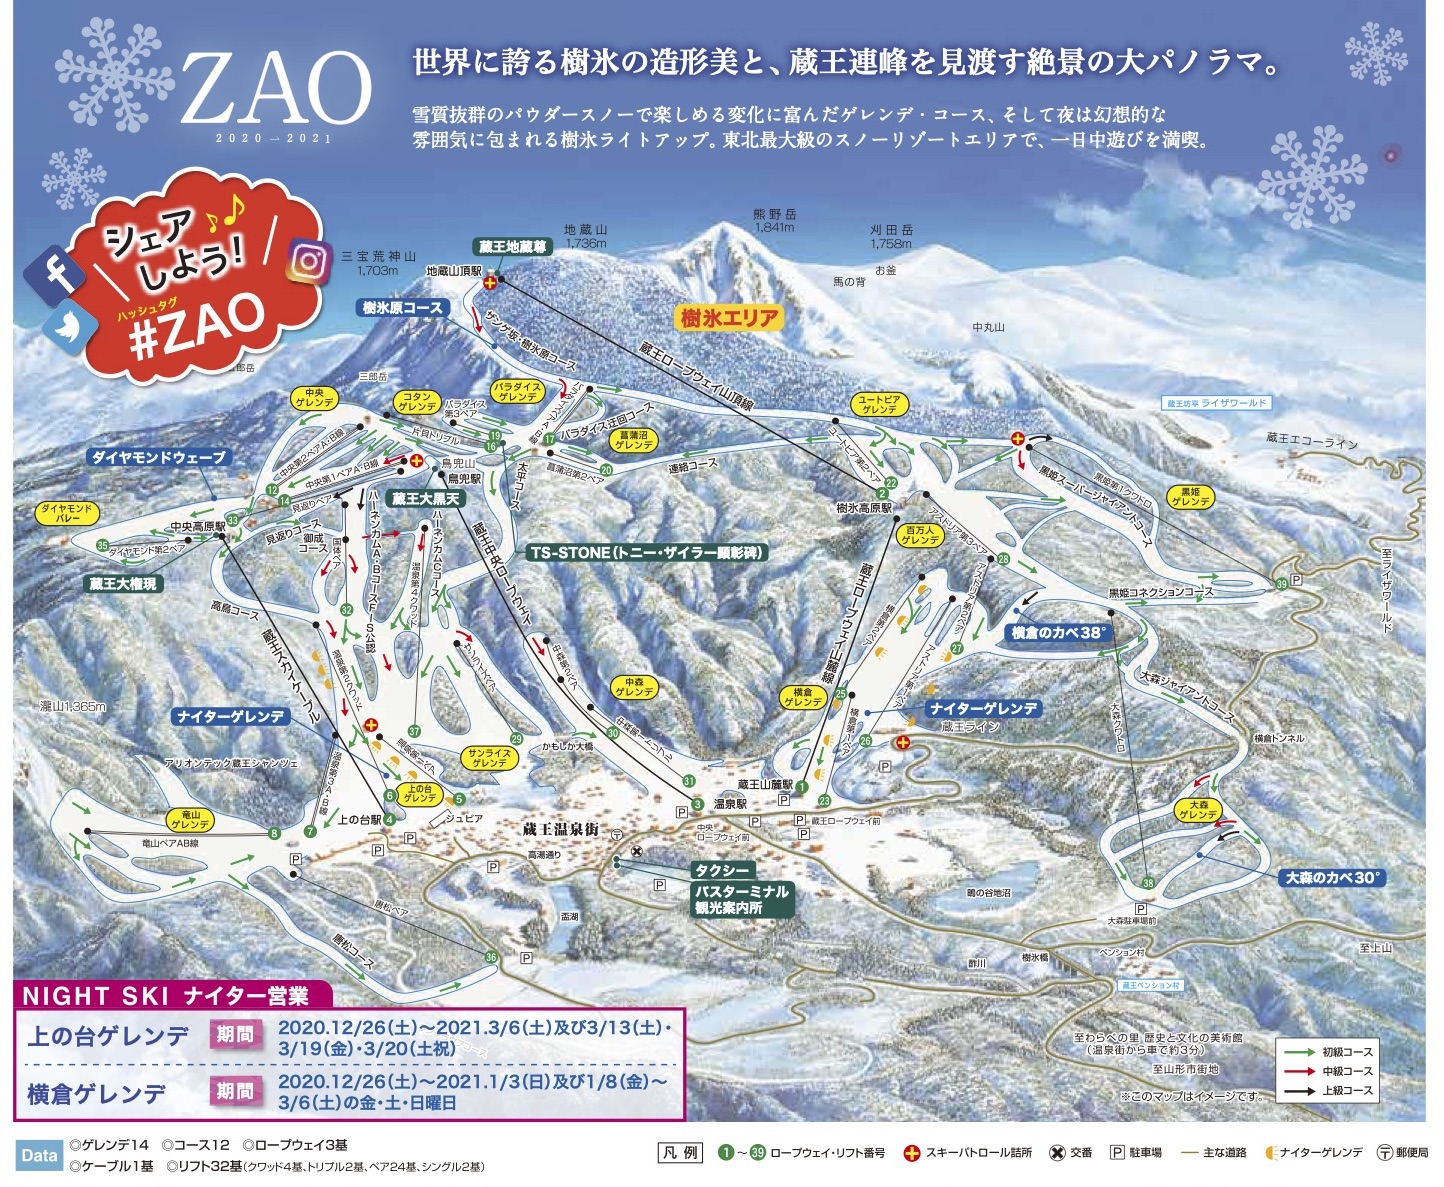 Zao Onsen Ski Resort! Slopes and courses information